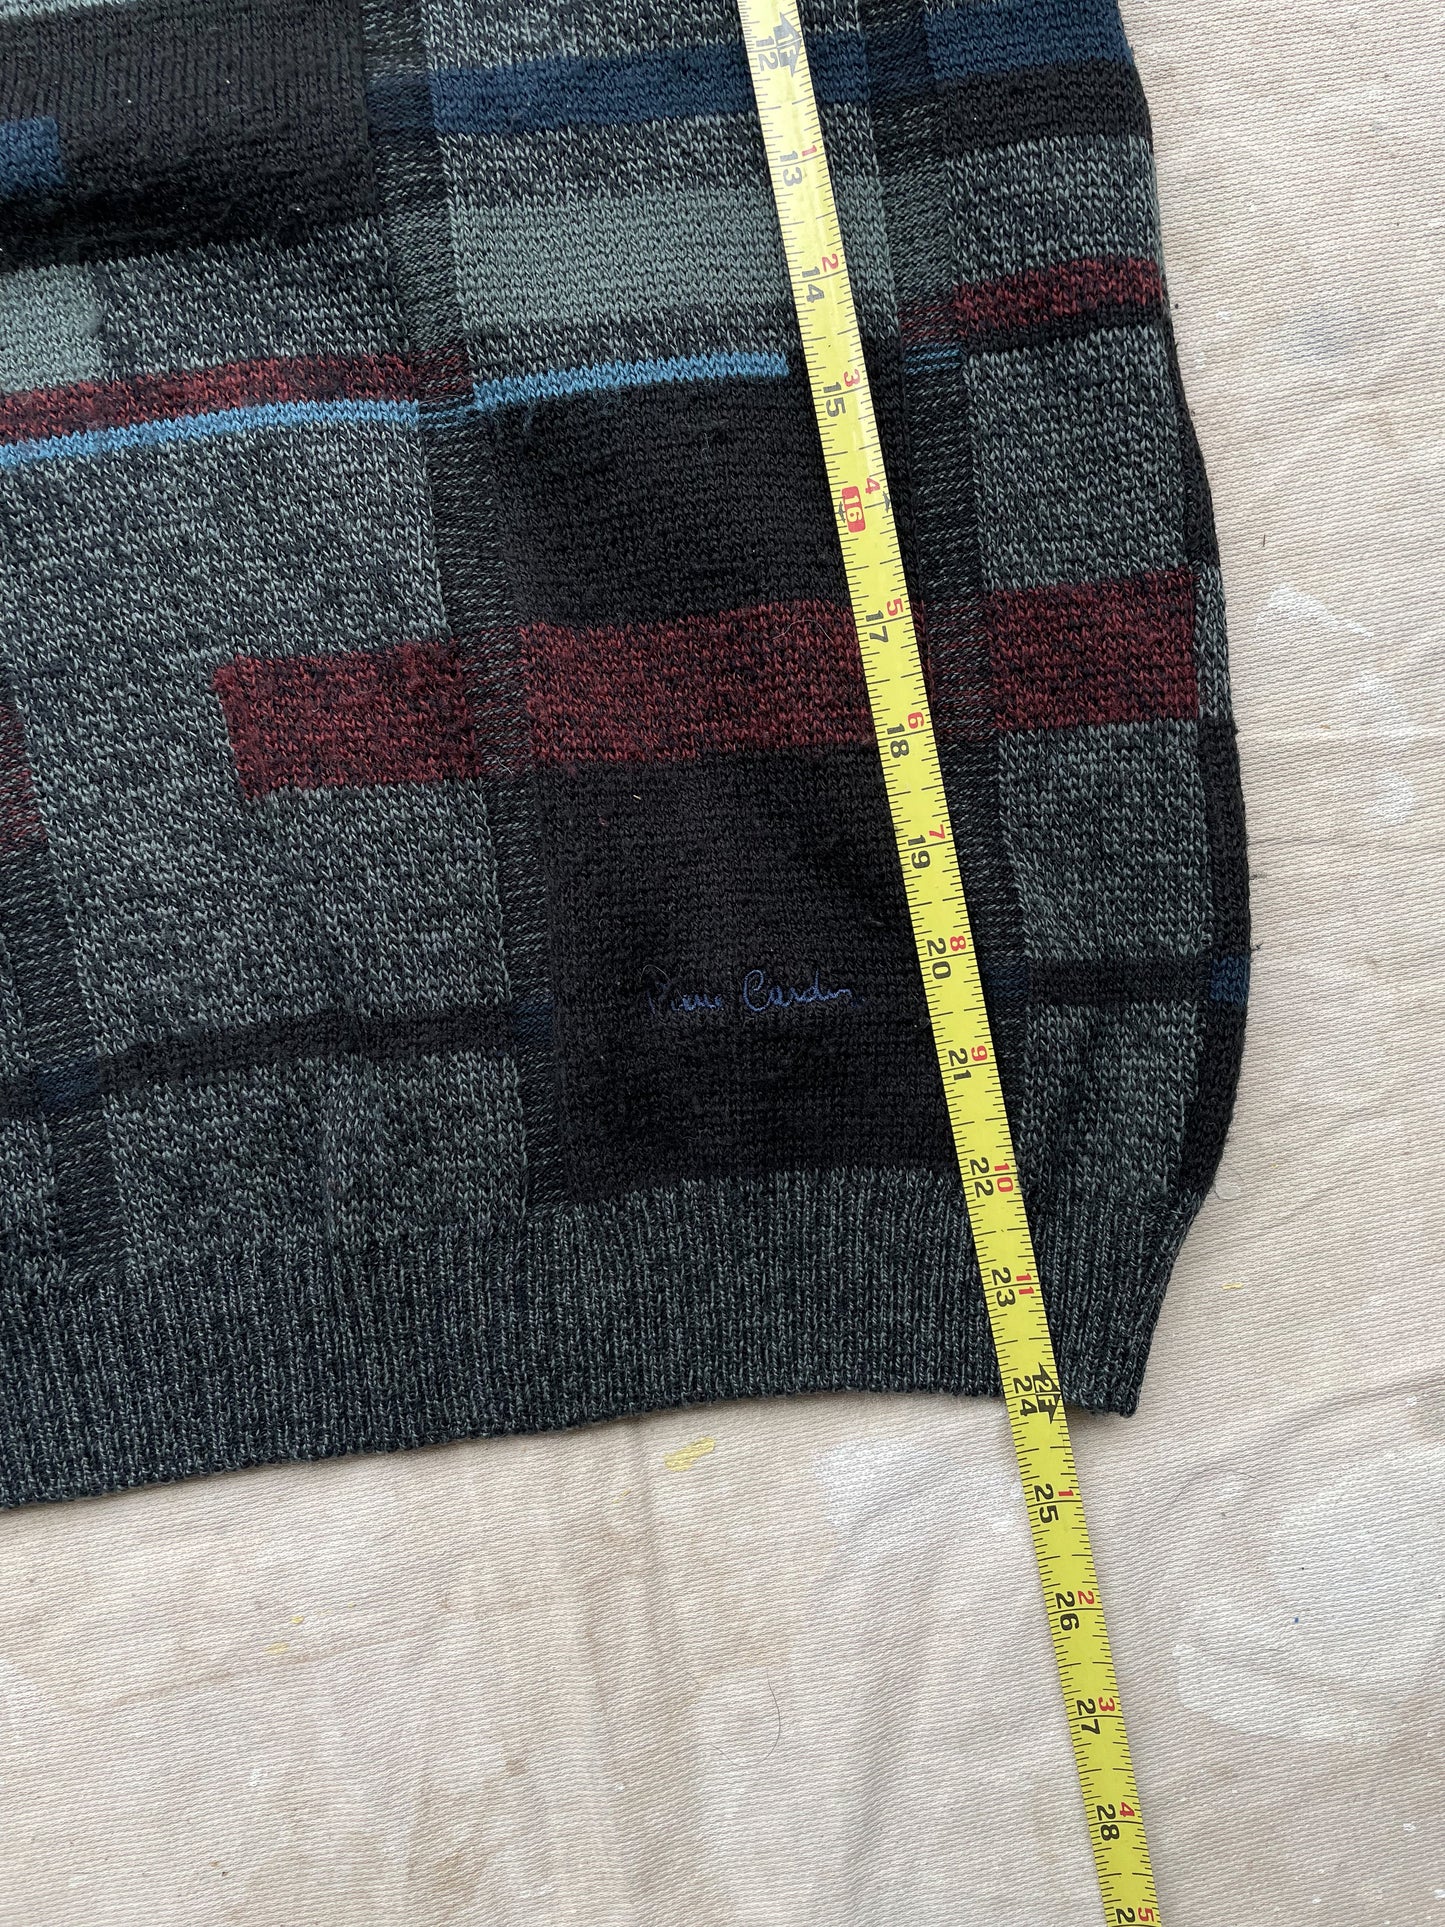 Geometric Sweater—[M]